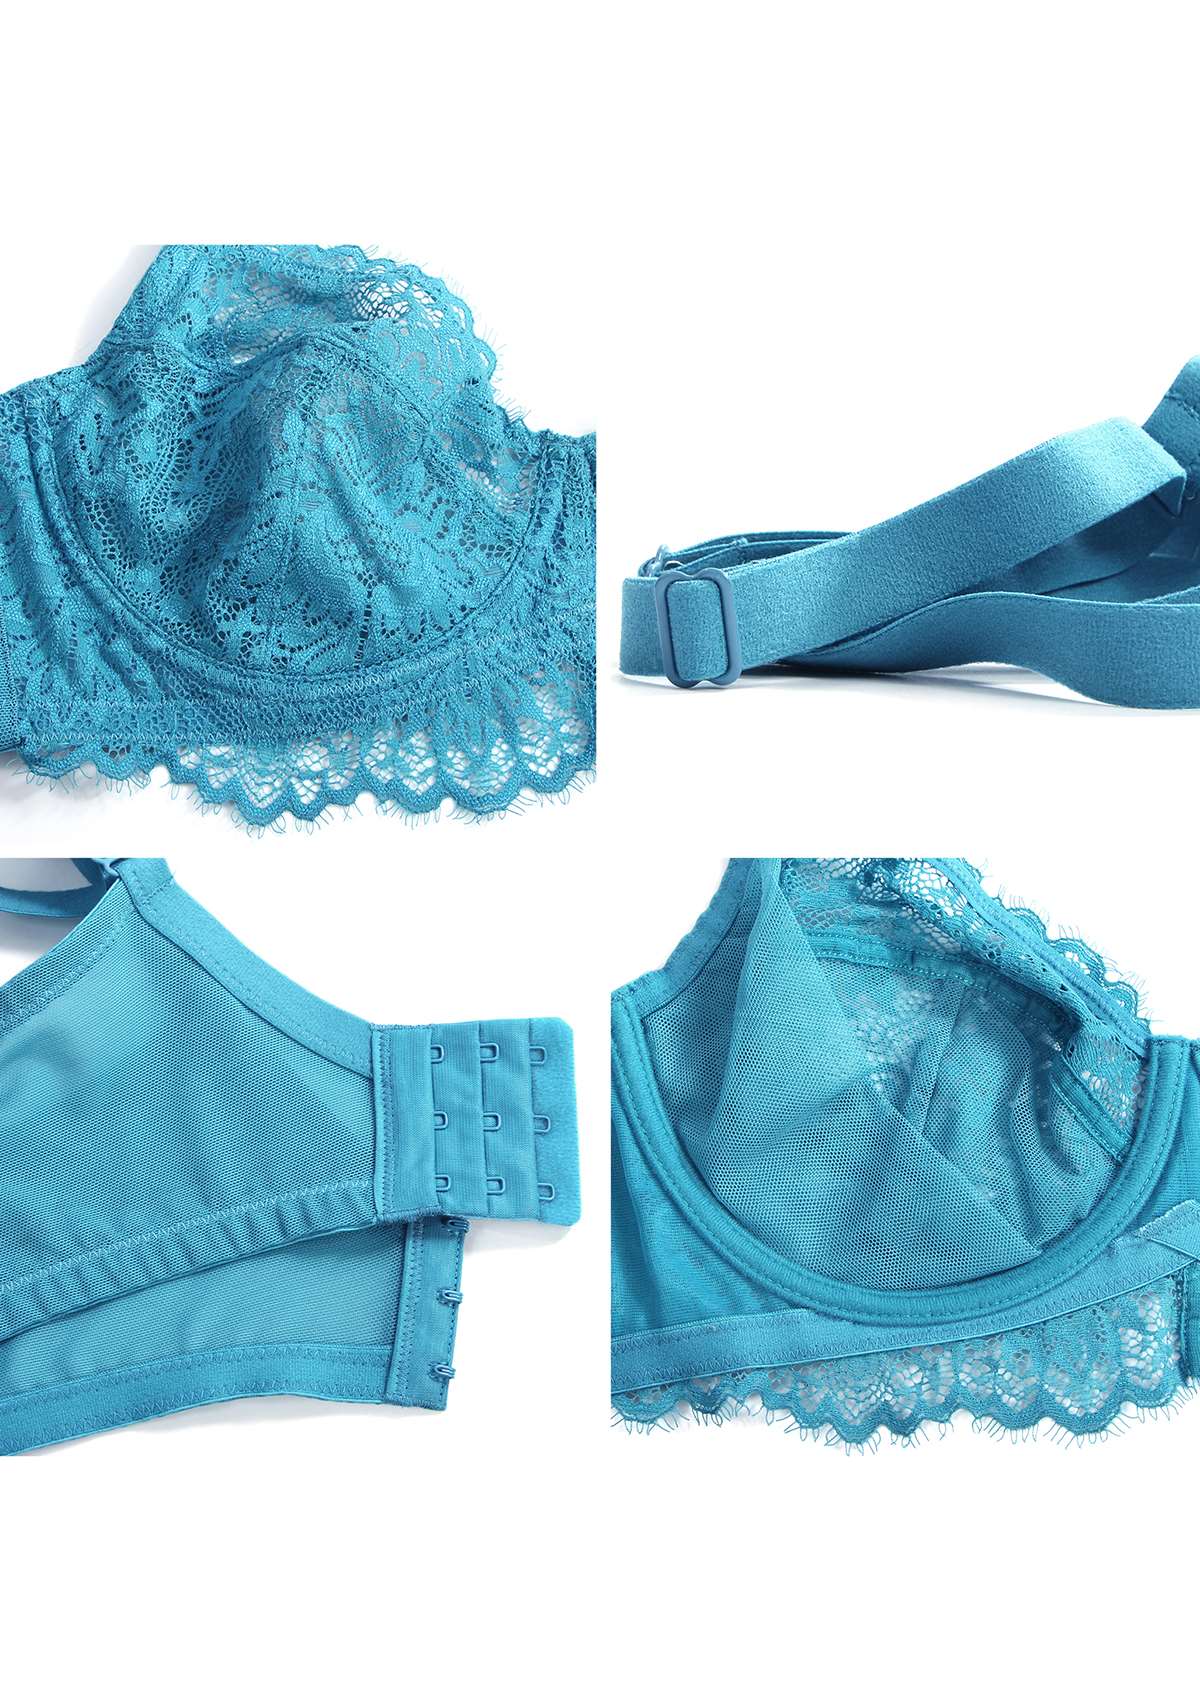 HSIA Sunflower Lace Bra And Panty: Cute Plus Size Comfort Bra - Horizon Blue / 44 / C